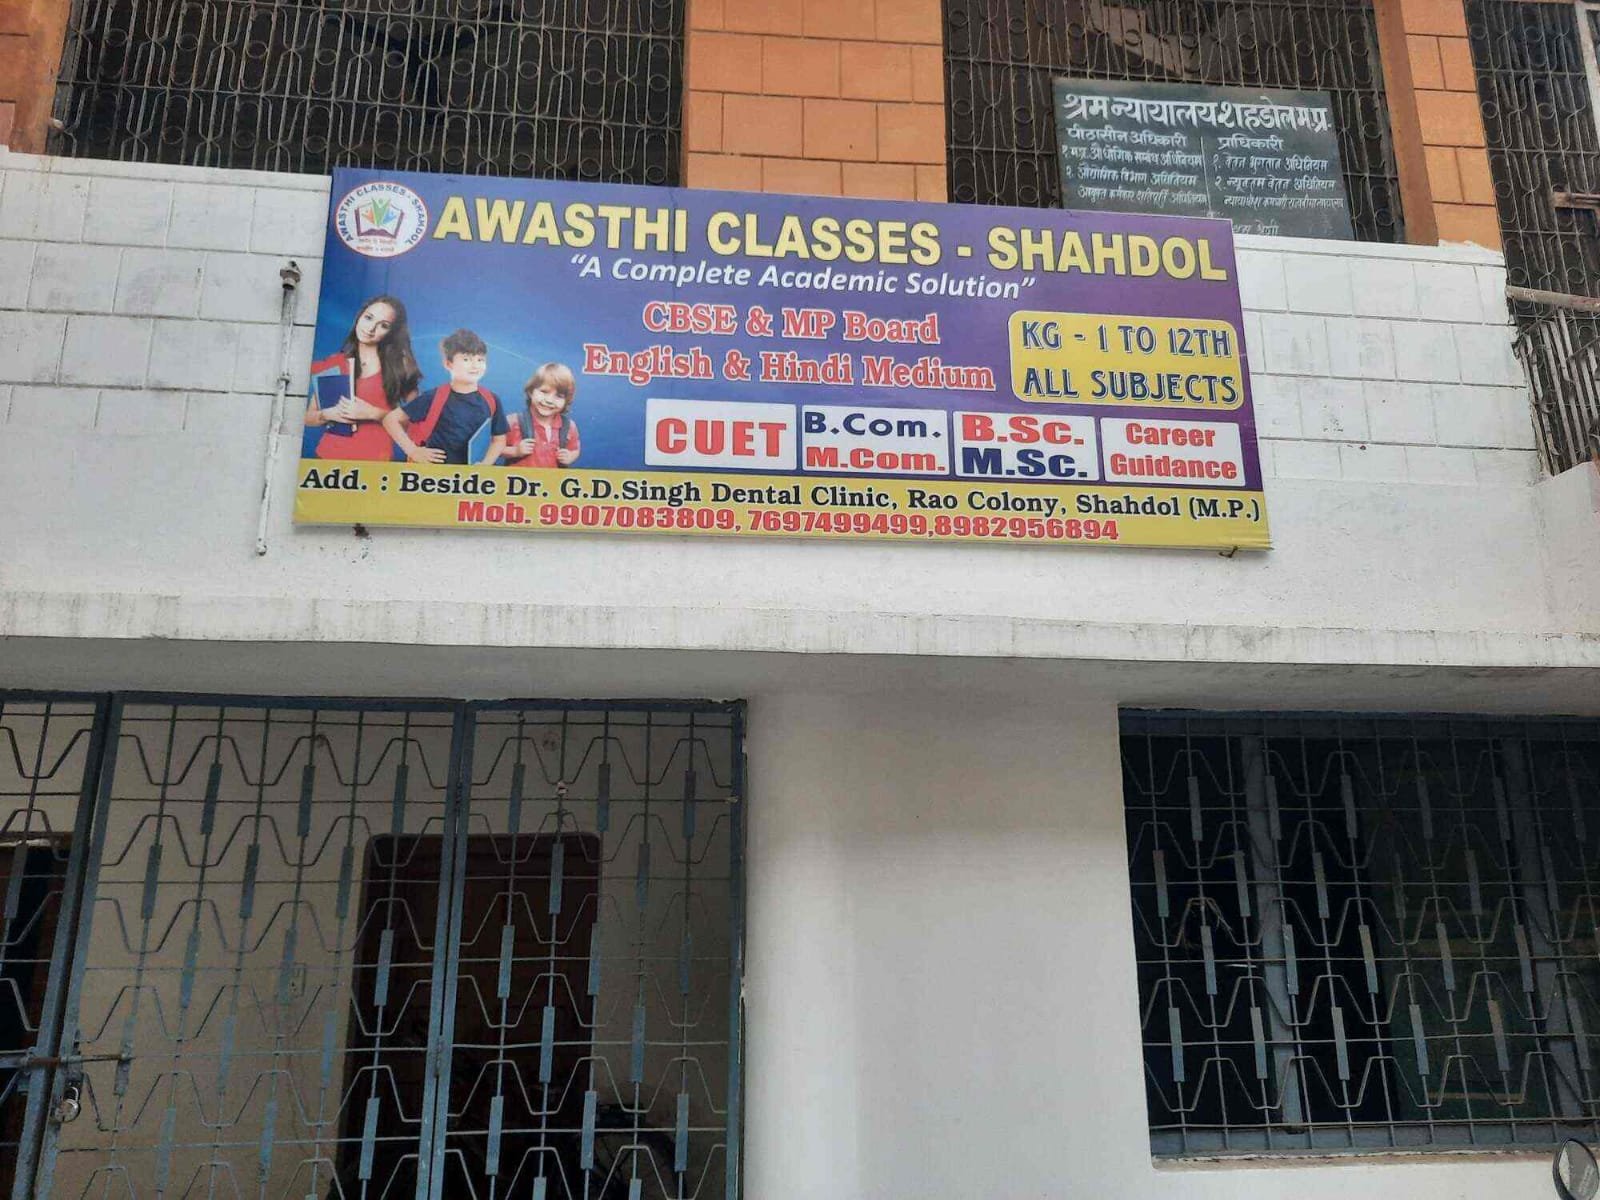 Awasthi Classes shahdol